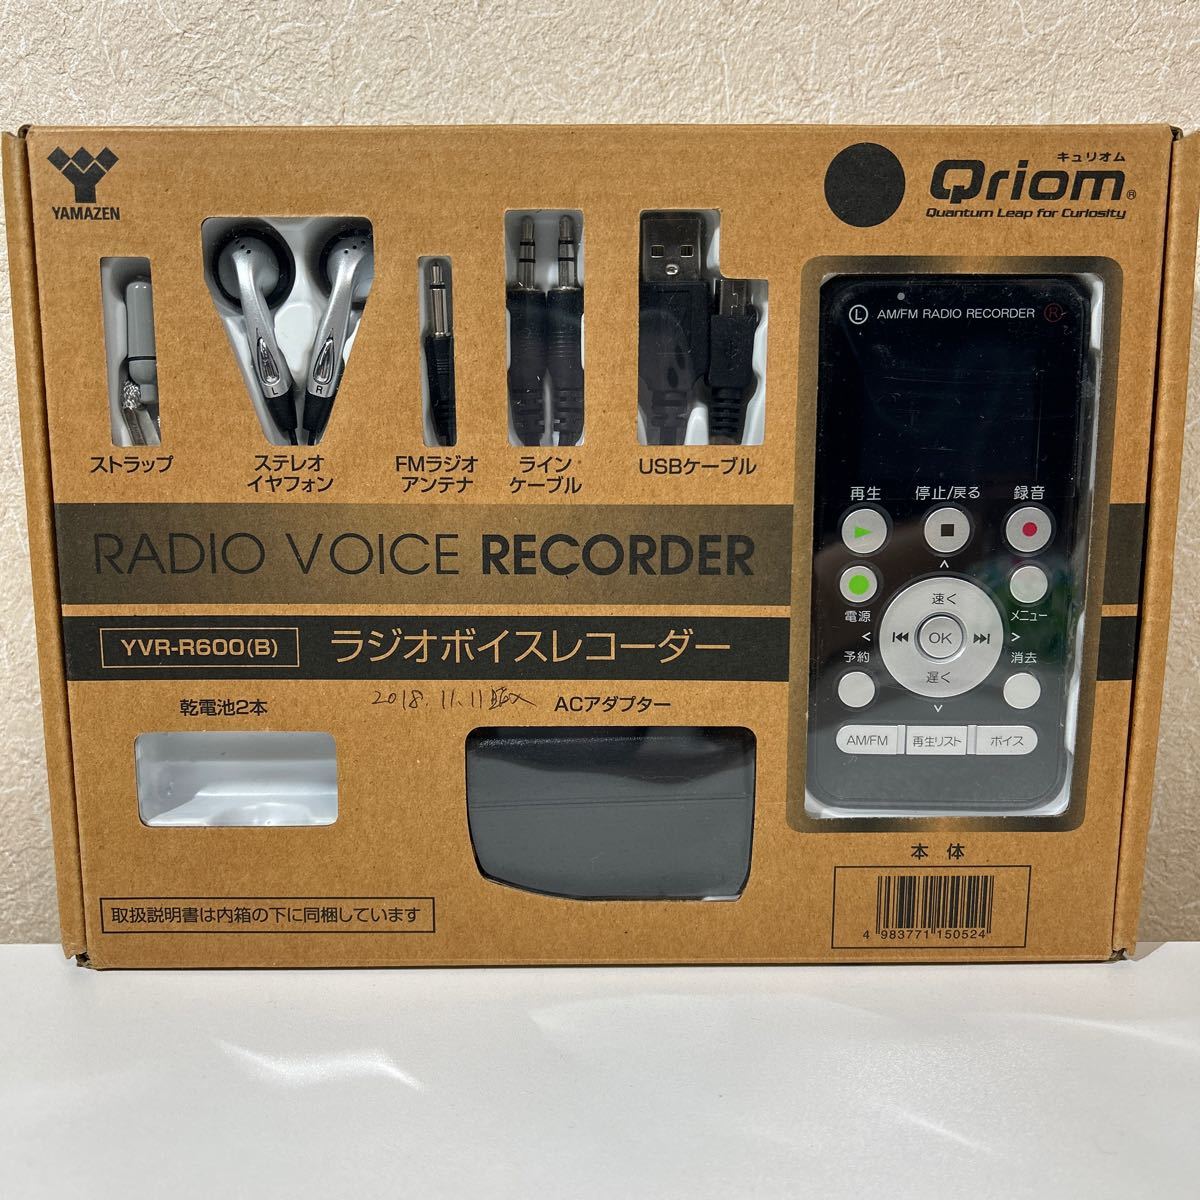 Qriom キュリオム ラジオボイスレコーダー YVR-R600(B) 黒 AM FM 付属品多数 ACアダプター 通電確認 乾電池欠品 元箱付 2018年 山善_画像1